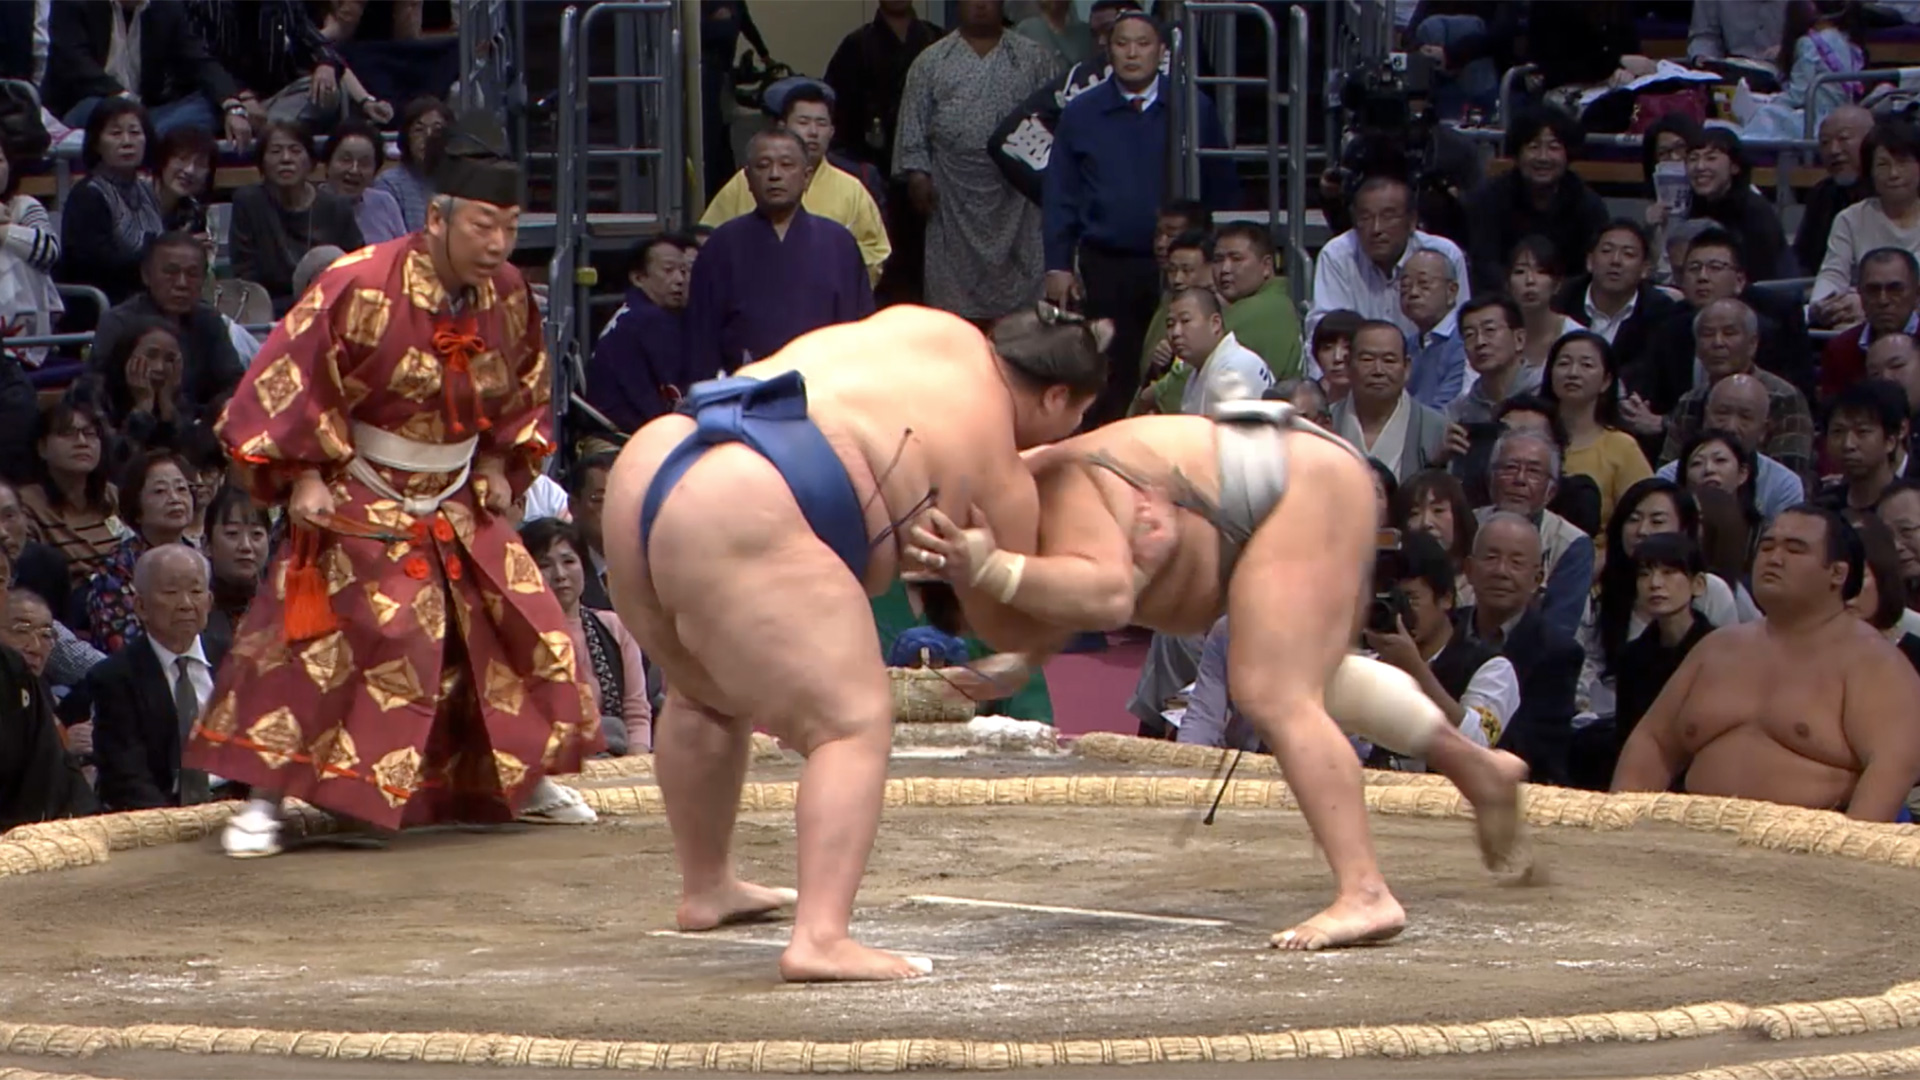 Katasukashi / Under shoulder swing down